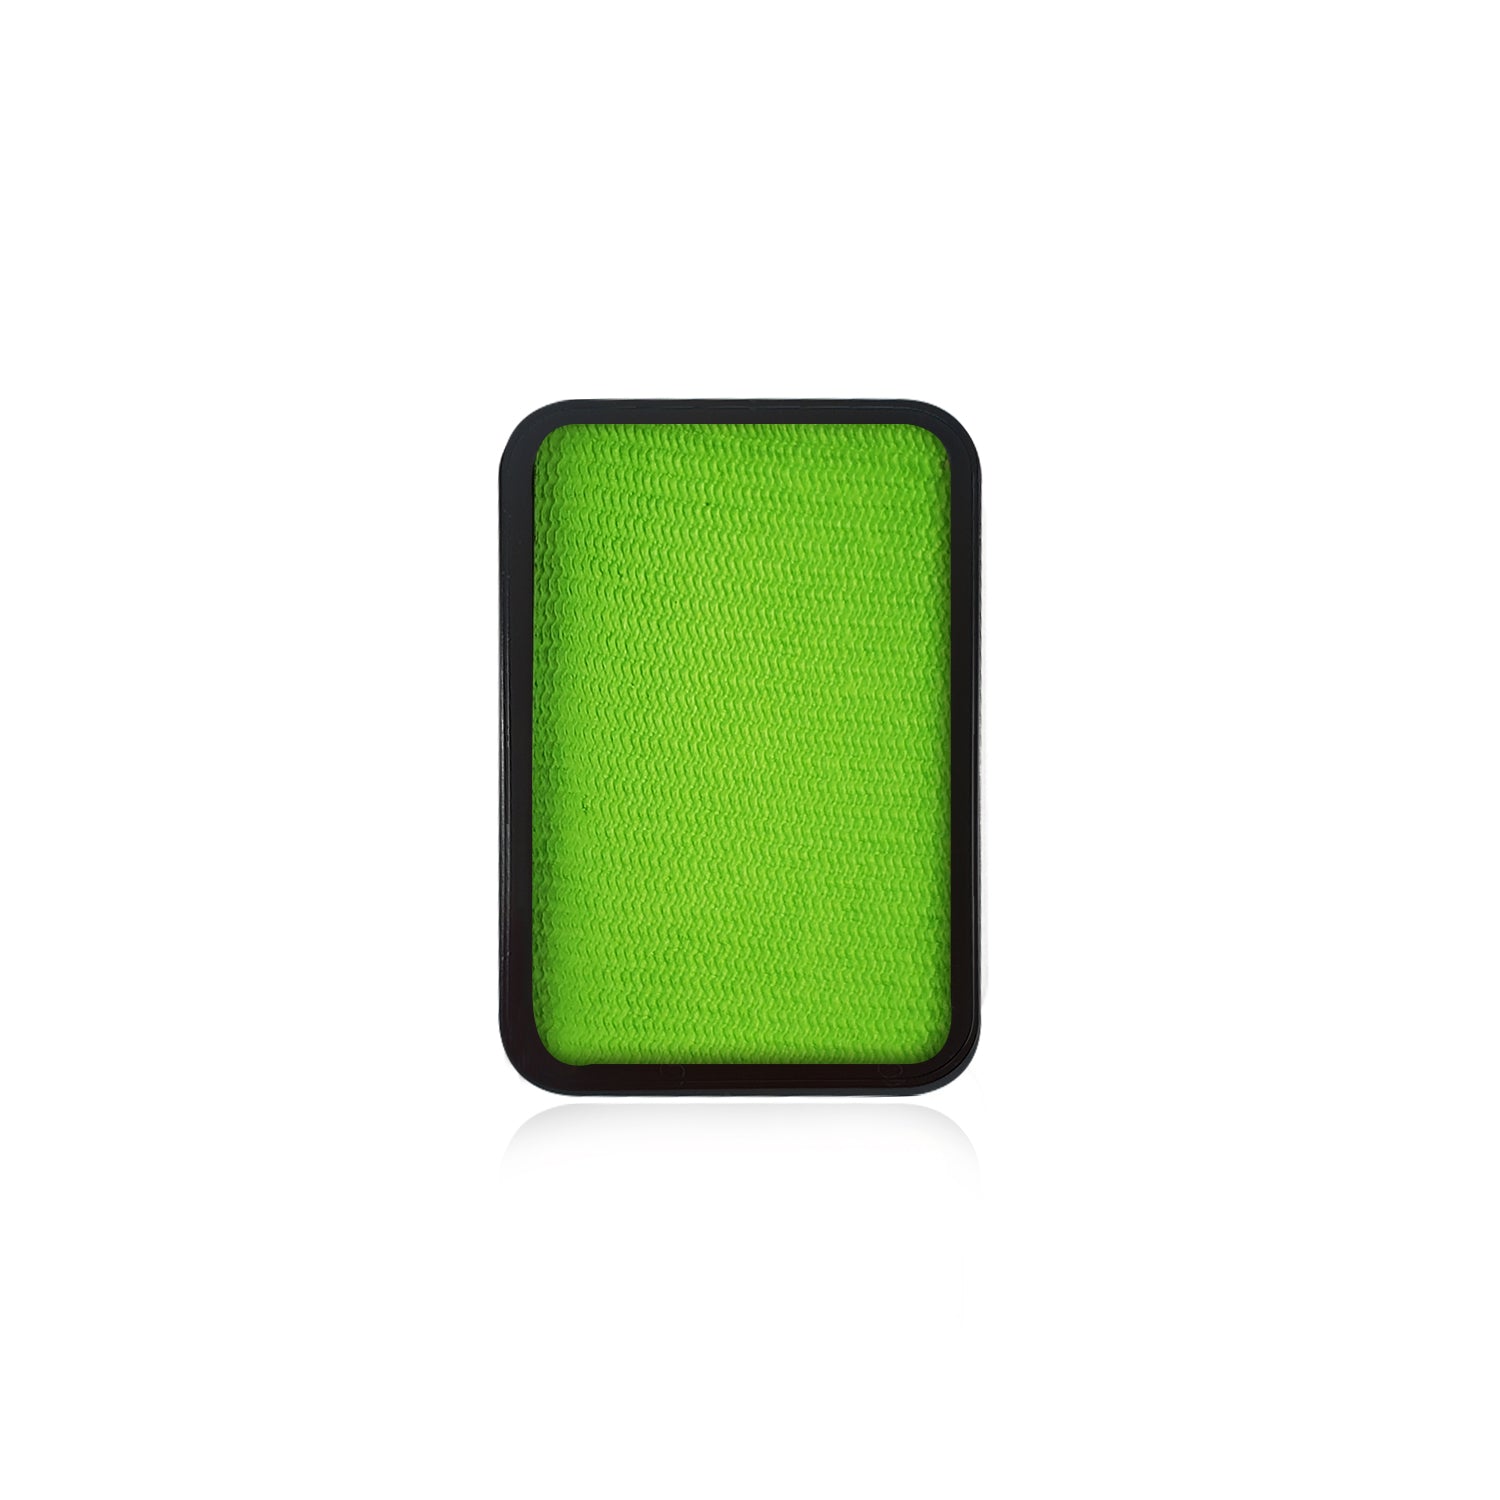 Kraze Face Paint Palette Refill - Lime Green (0.35 oz/10 gm)